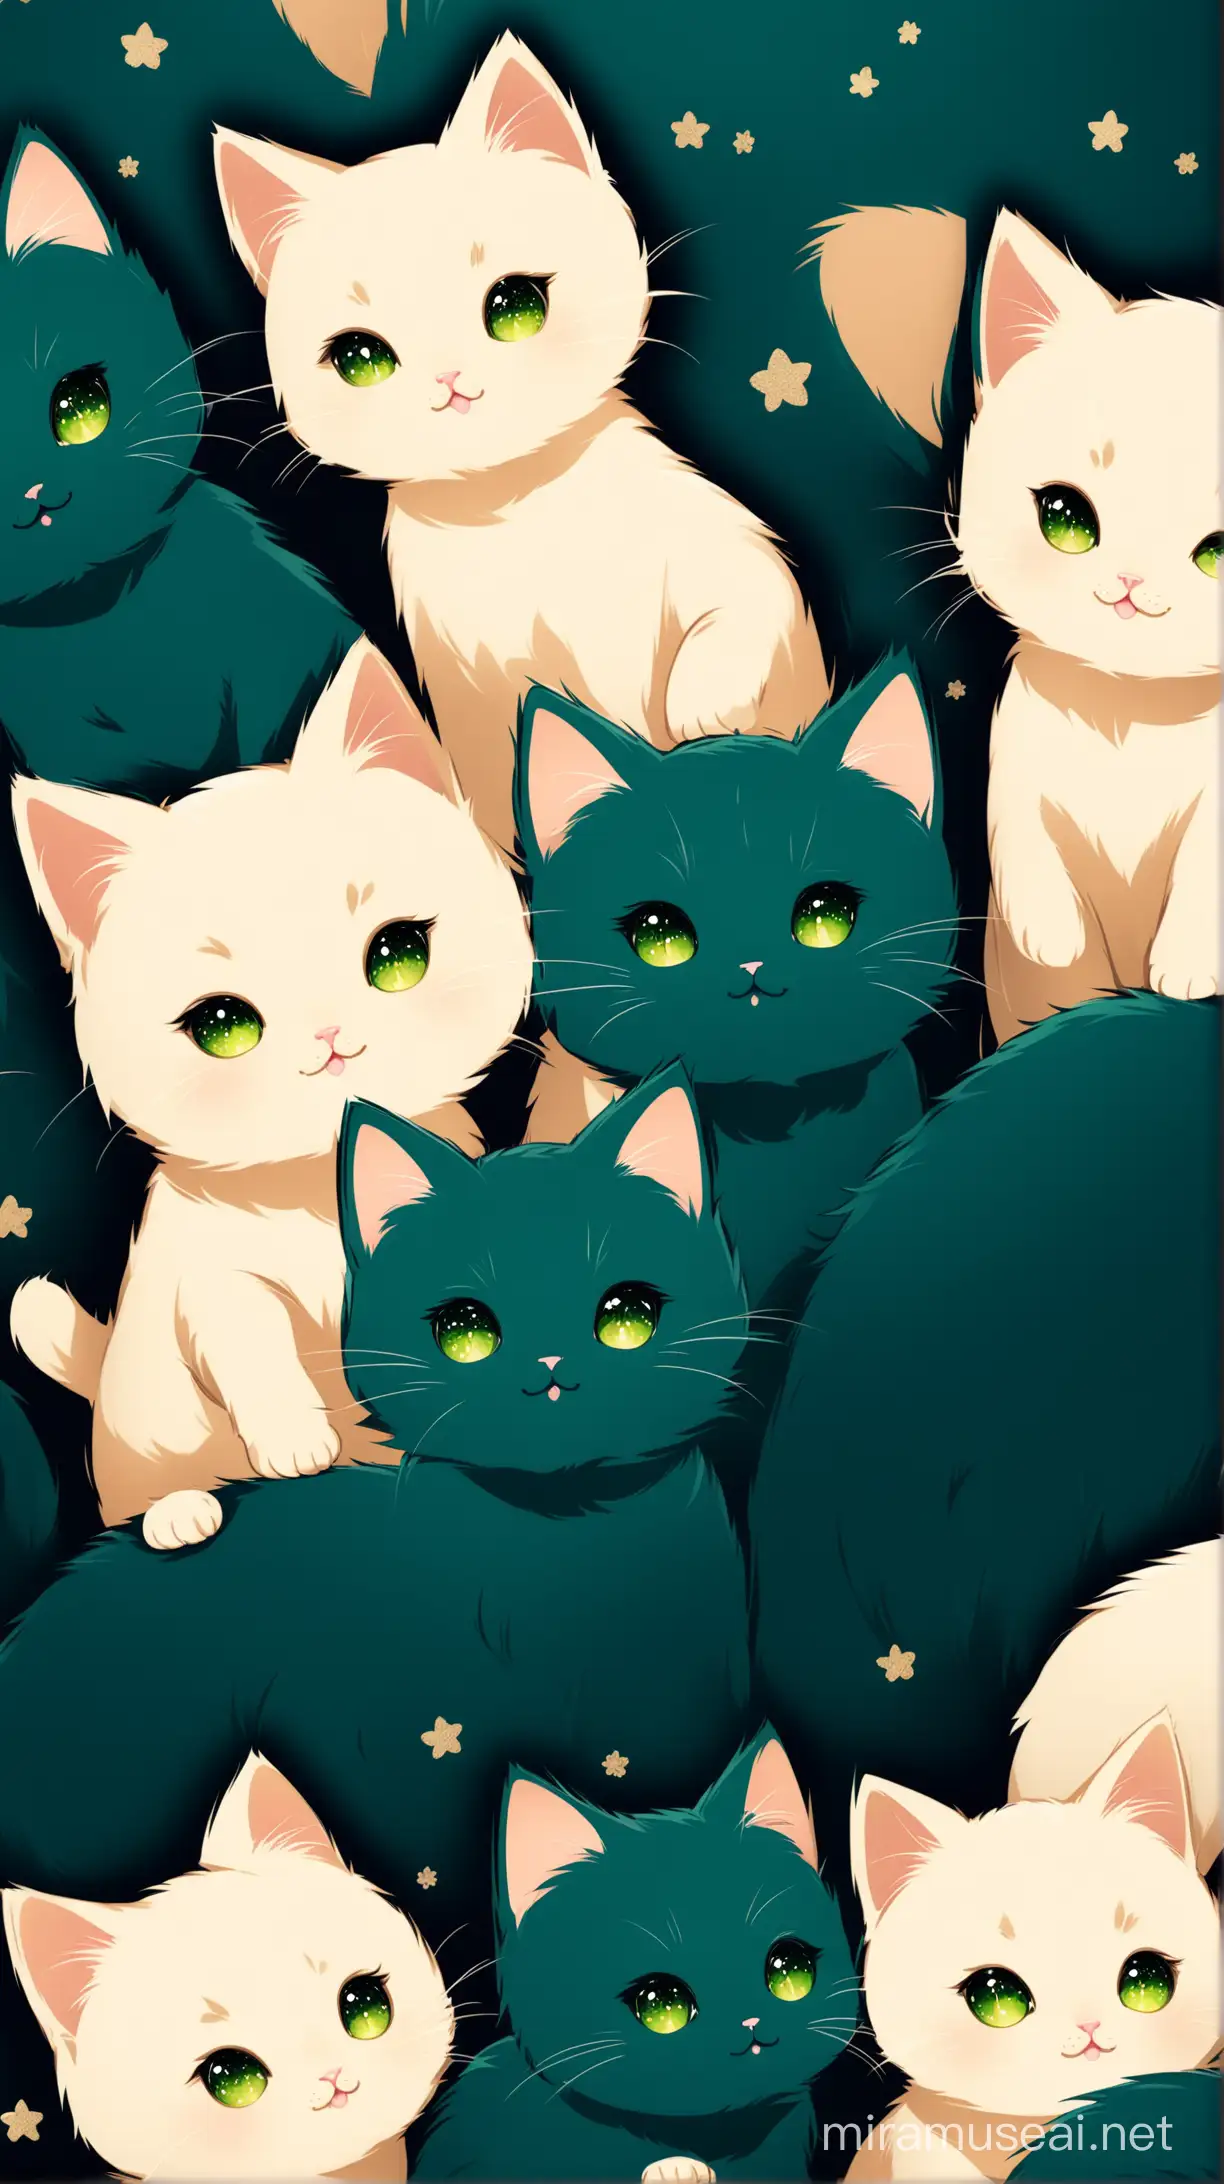 Adorable Kittens on Dark BlueGreen Background Wallpaper and Phone Wallpaper